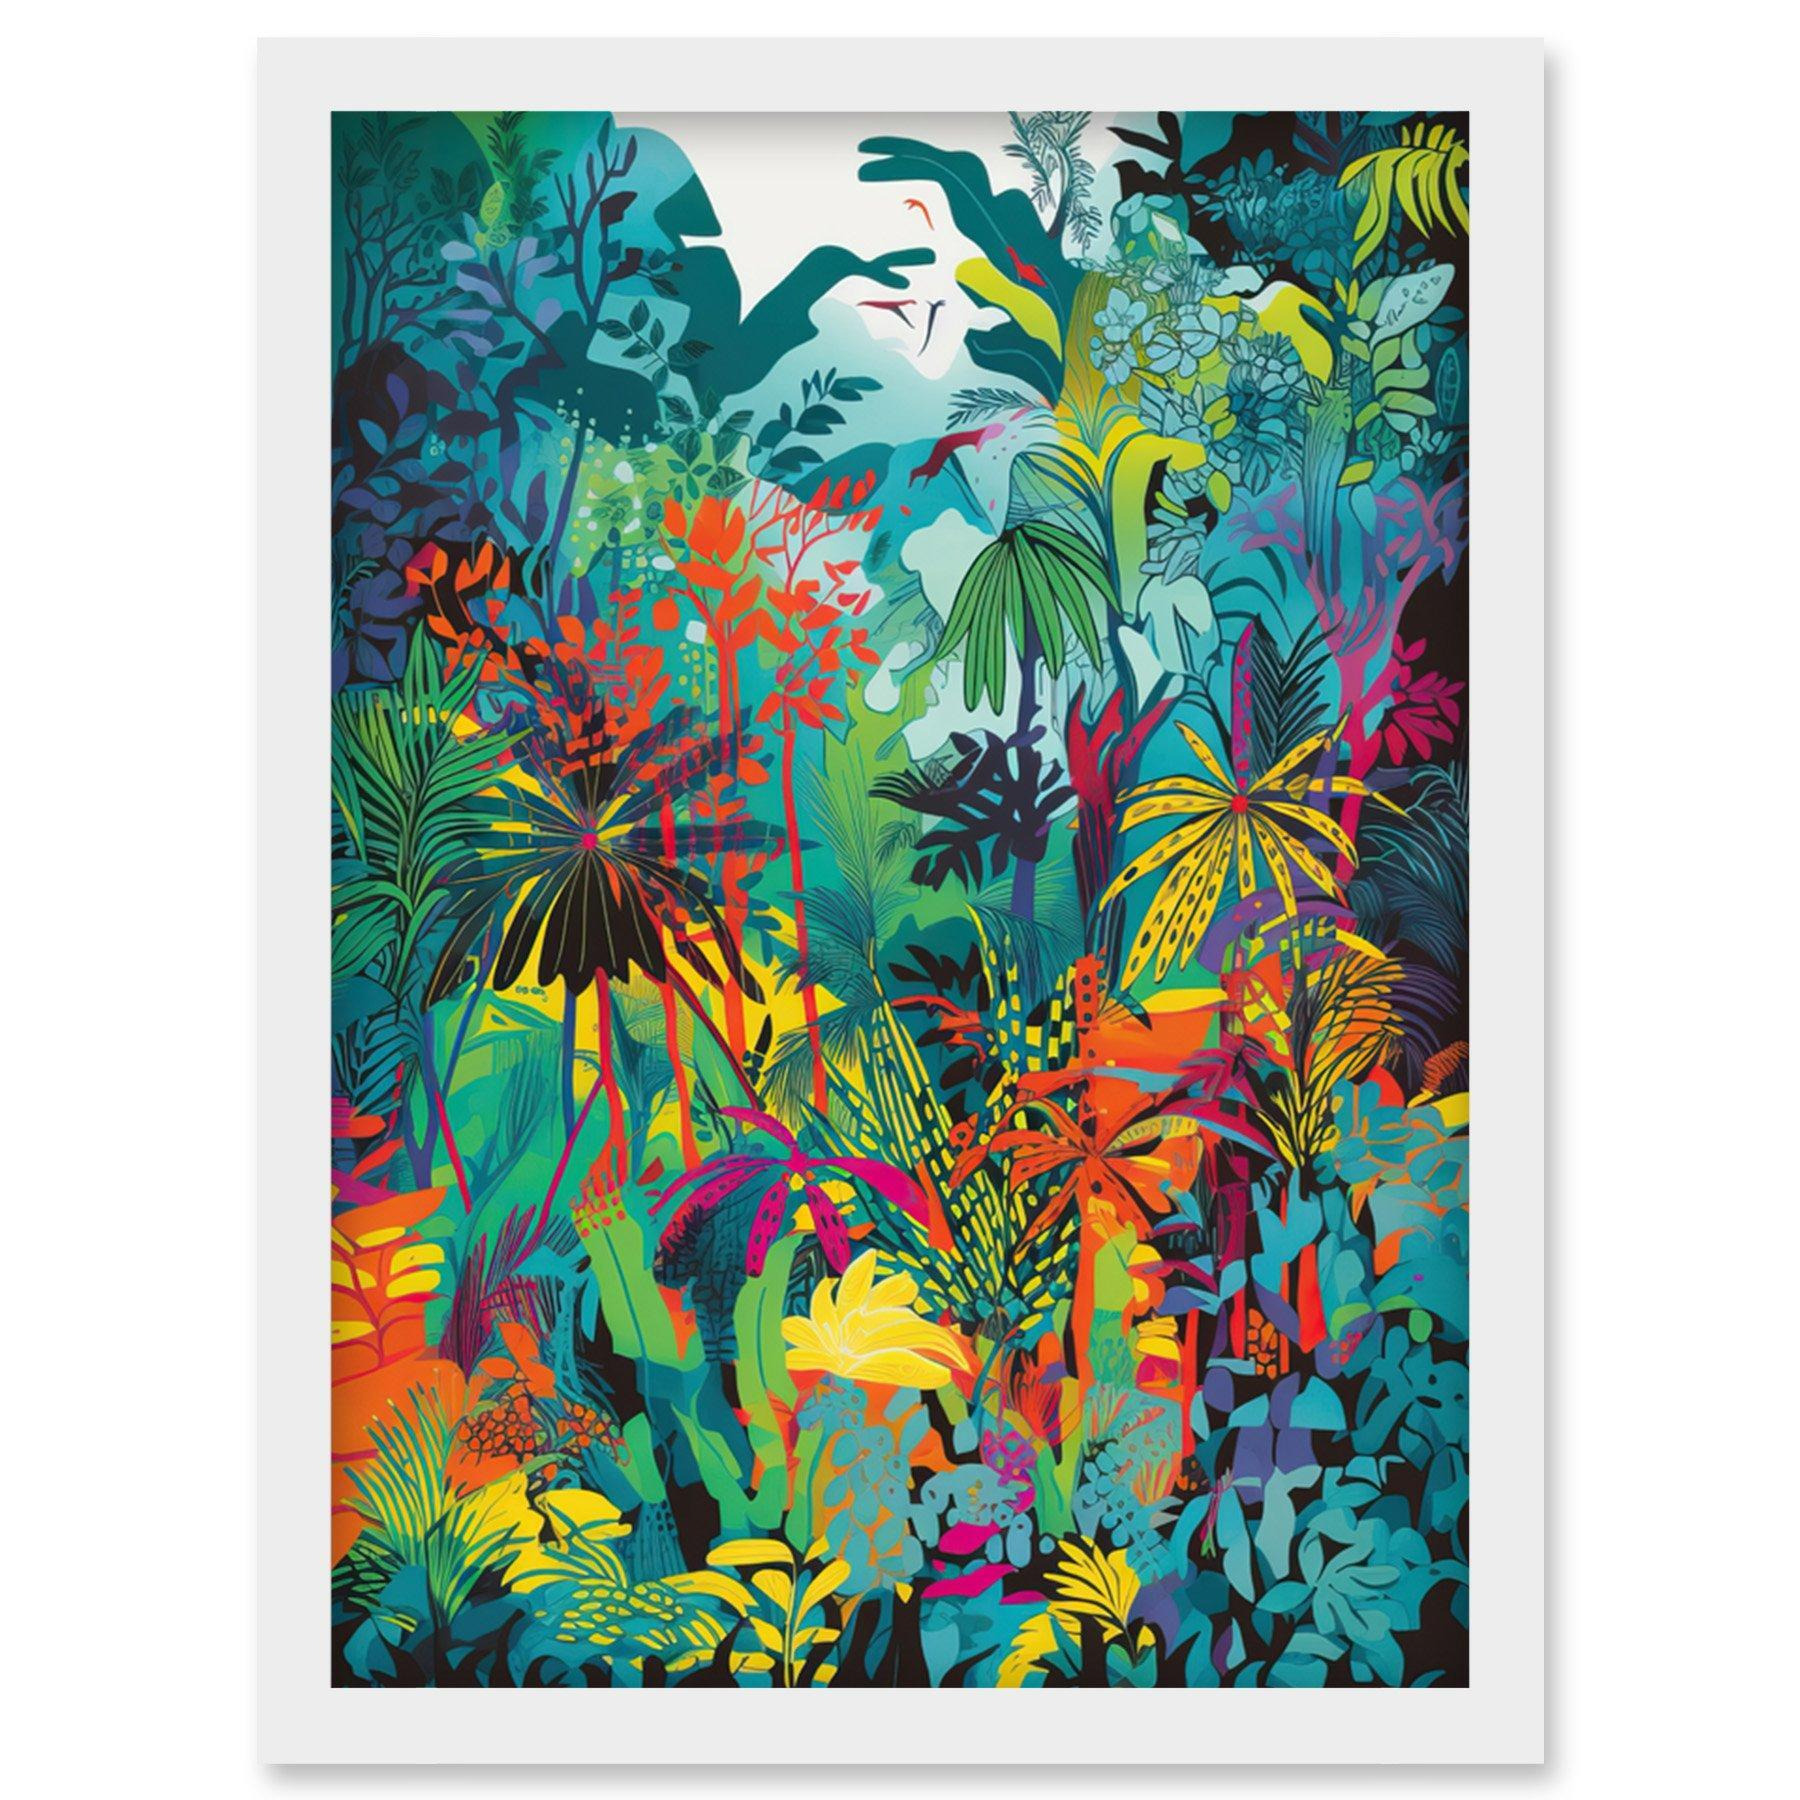 Rainforest Landscape Vibrant Multicoloured Nature Artwork Framed Wall Art Print A4 - image 1